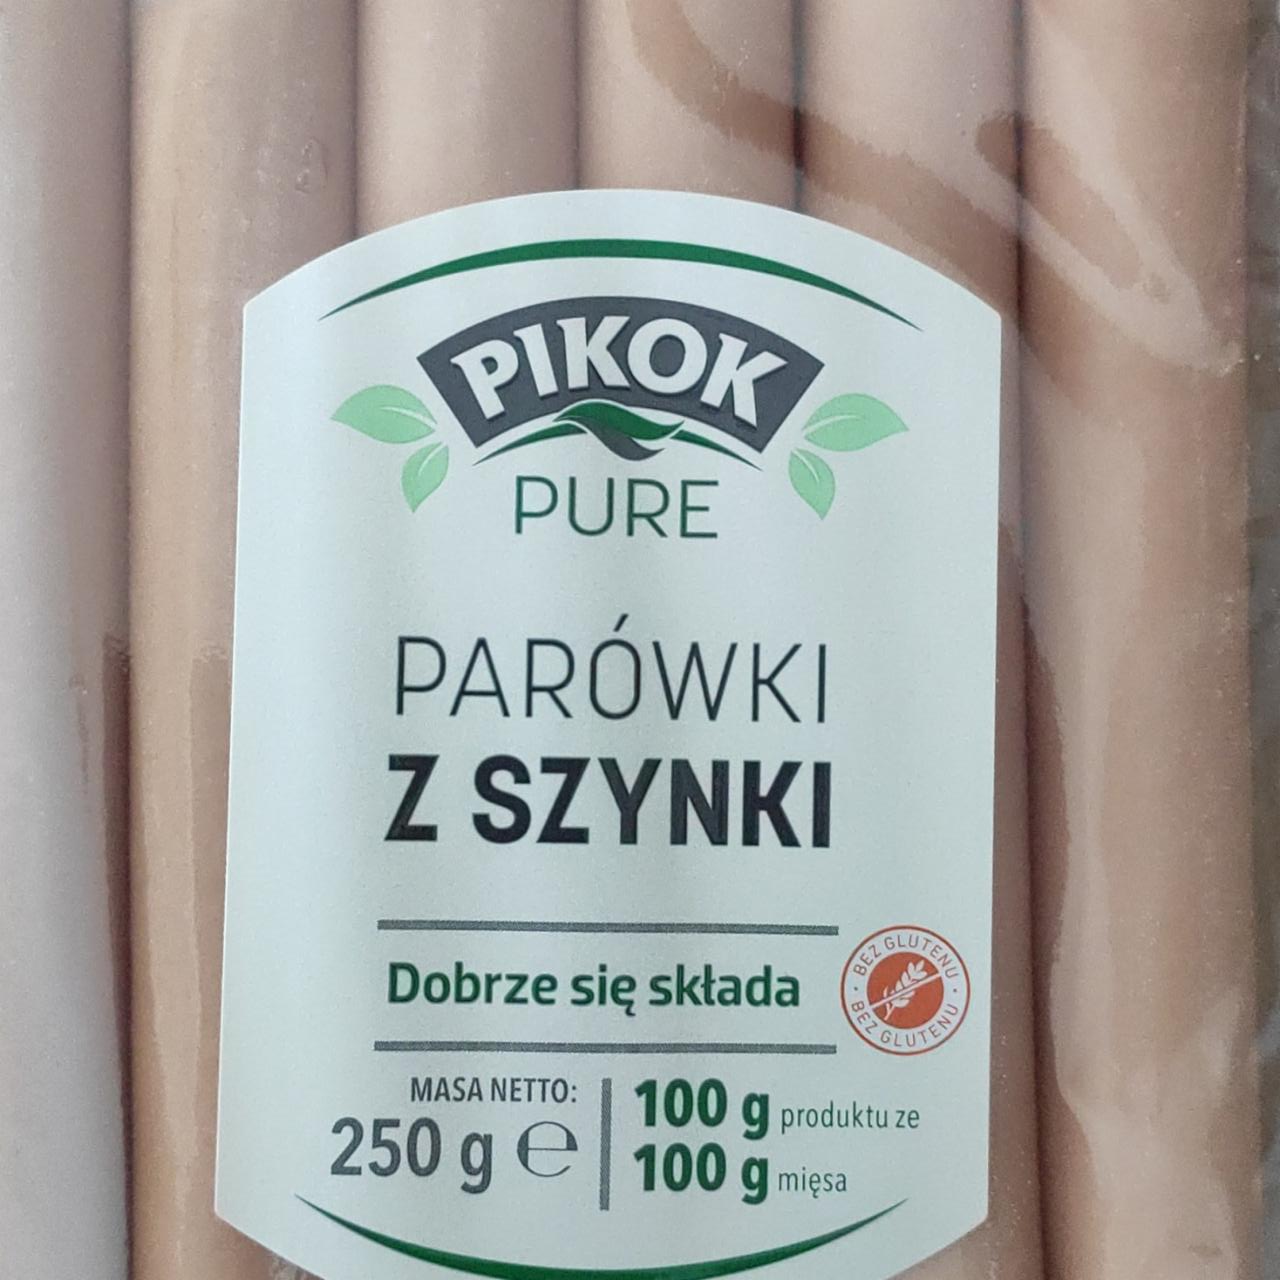 Фото - Сосиски из свинины Pure Pikok